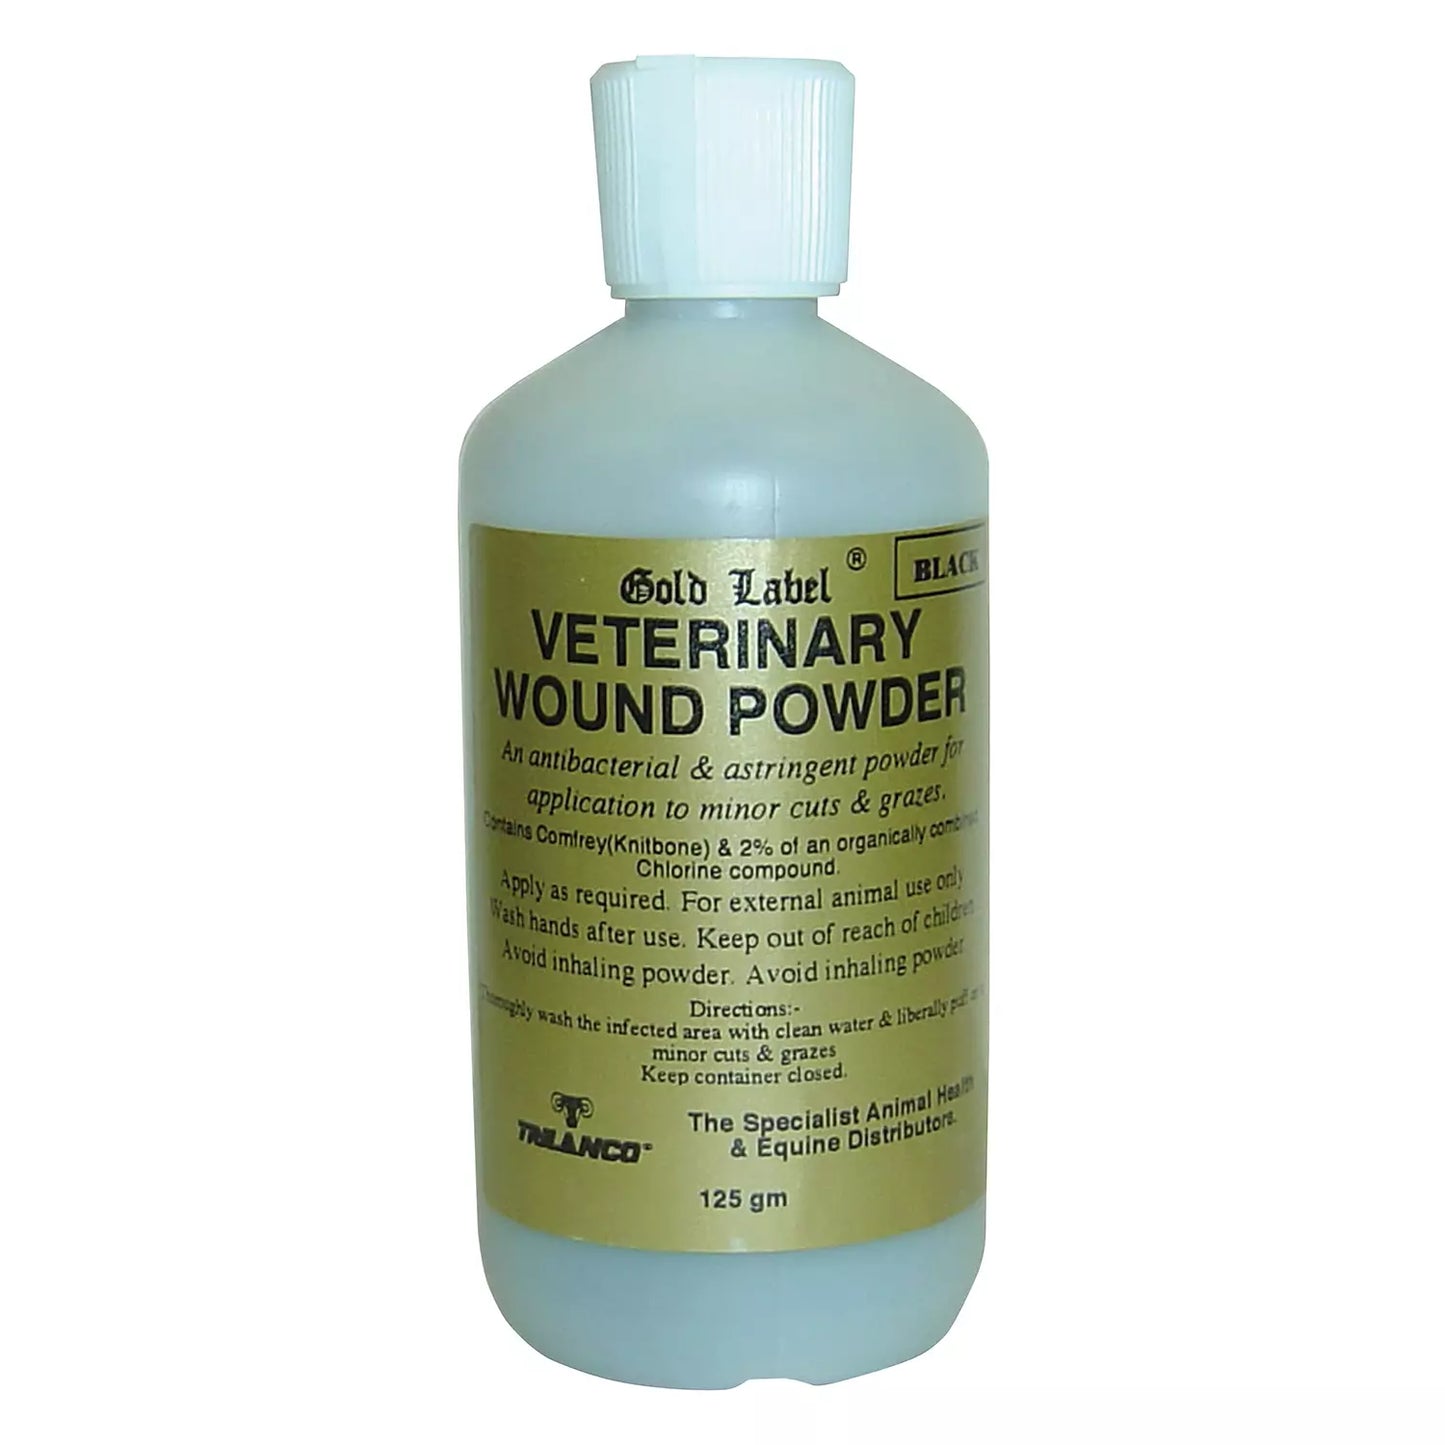 Gold Label Veterinary Wound Powder 125g